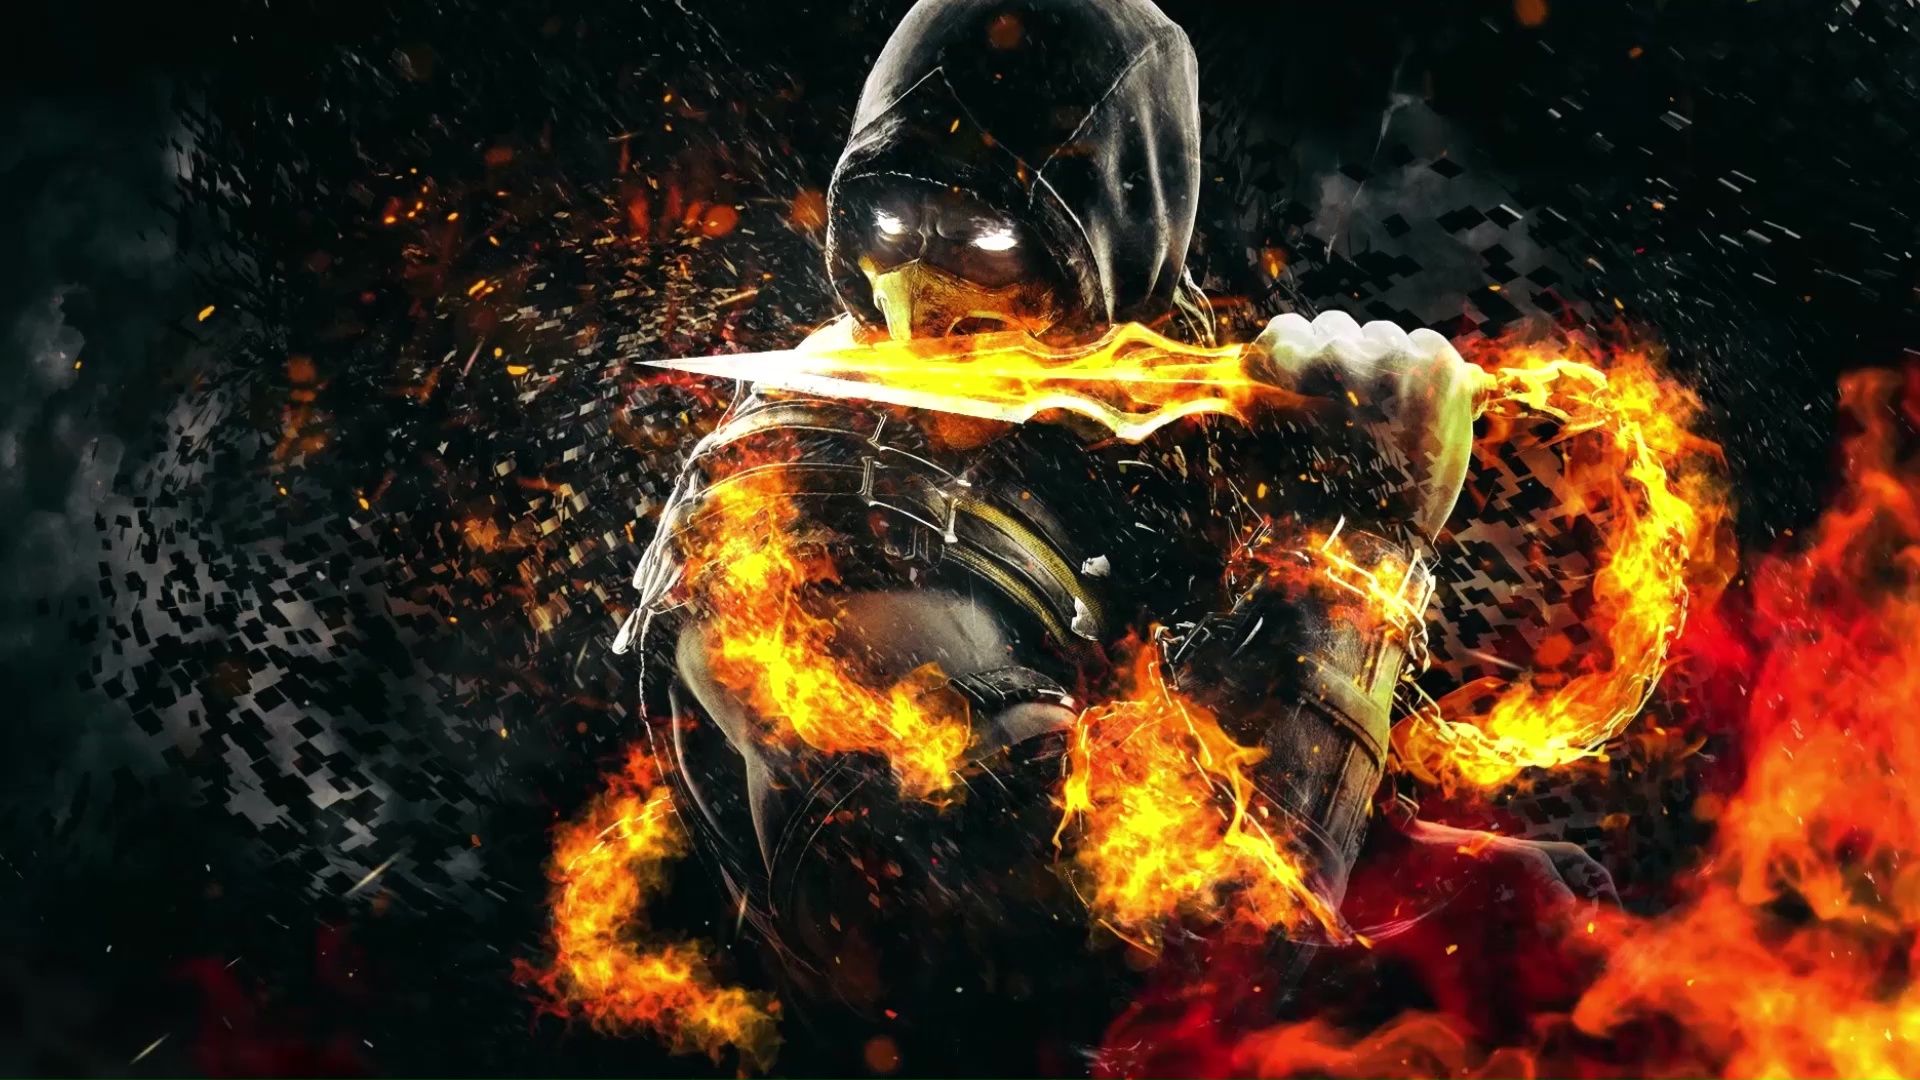 Top 999+ Mortal Kombat 11 Wallpaper Full HD, 4K✓Free to Use